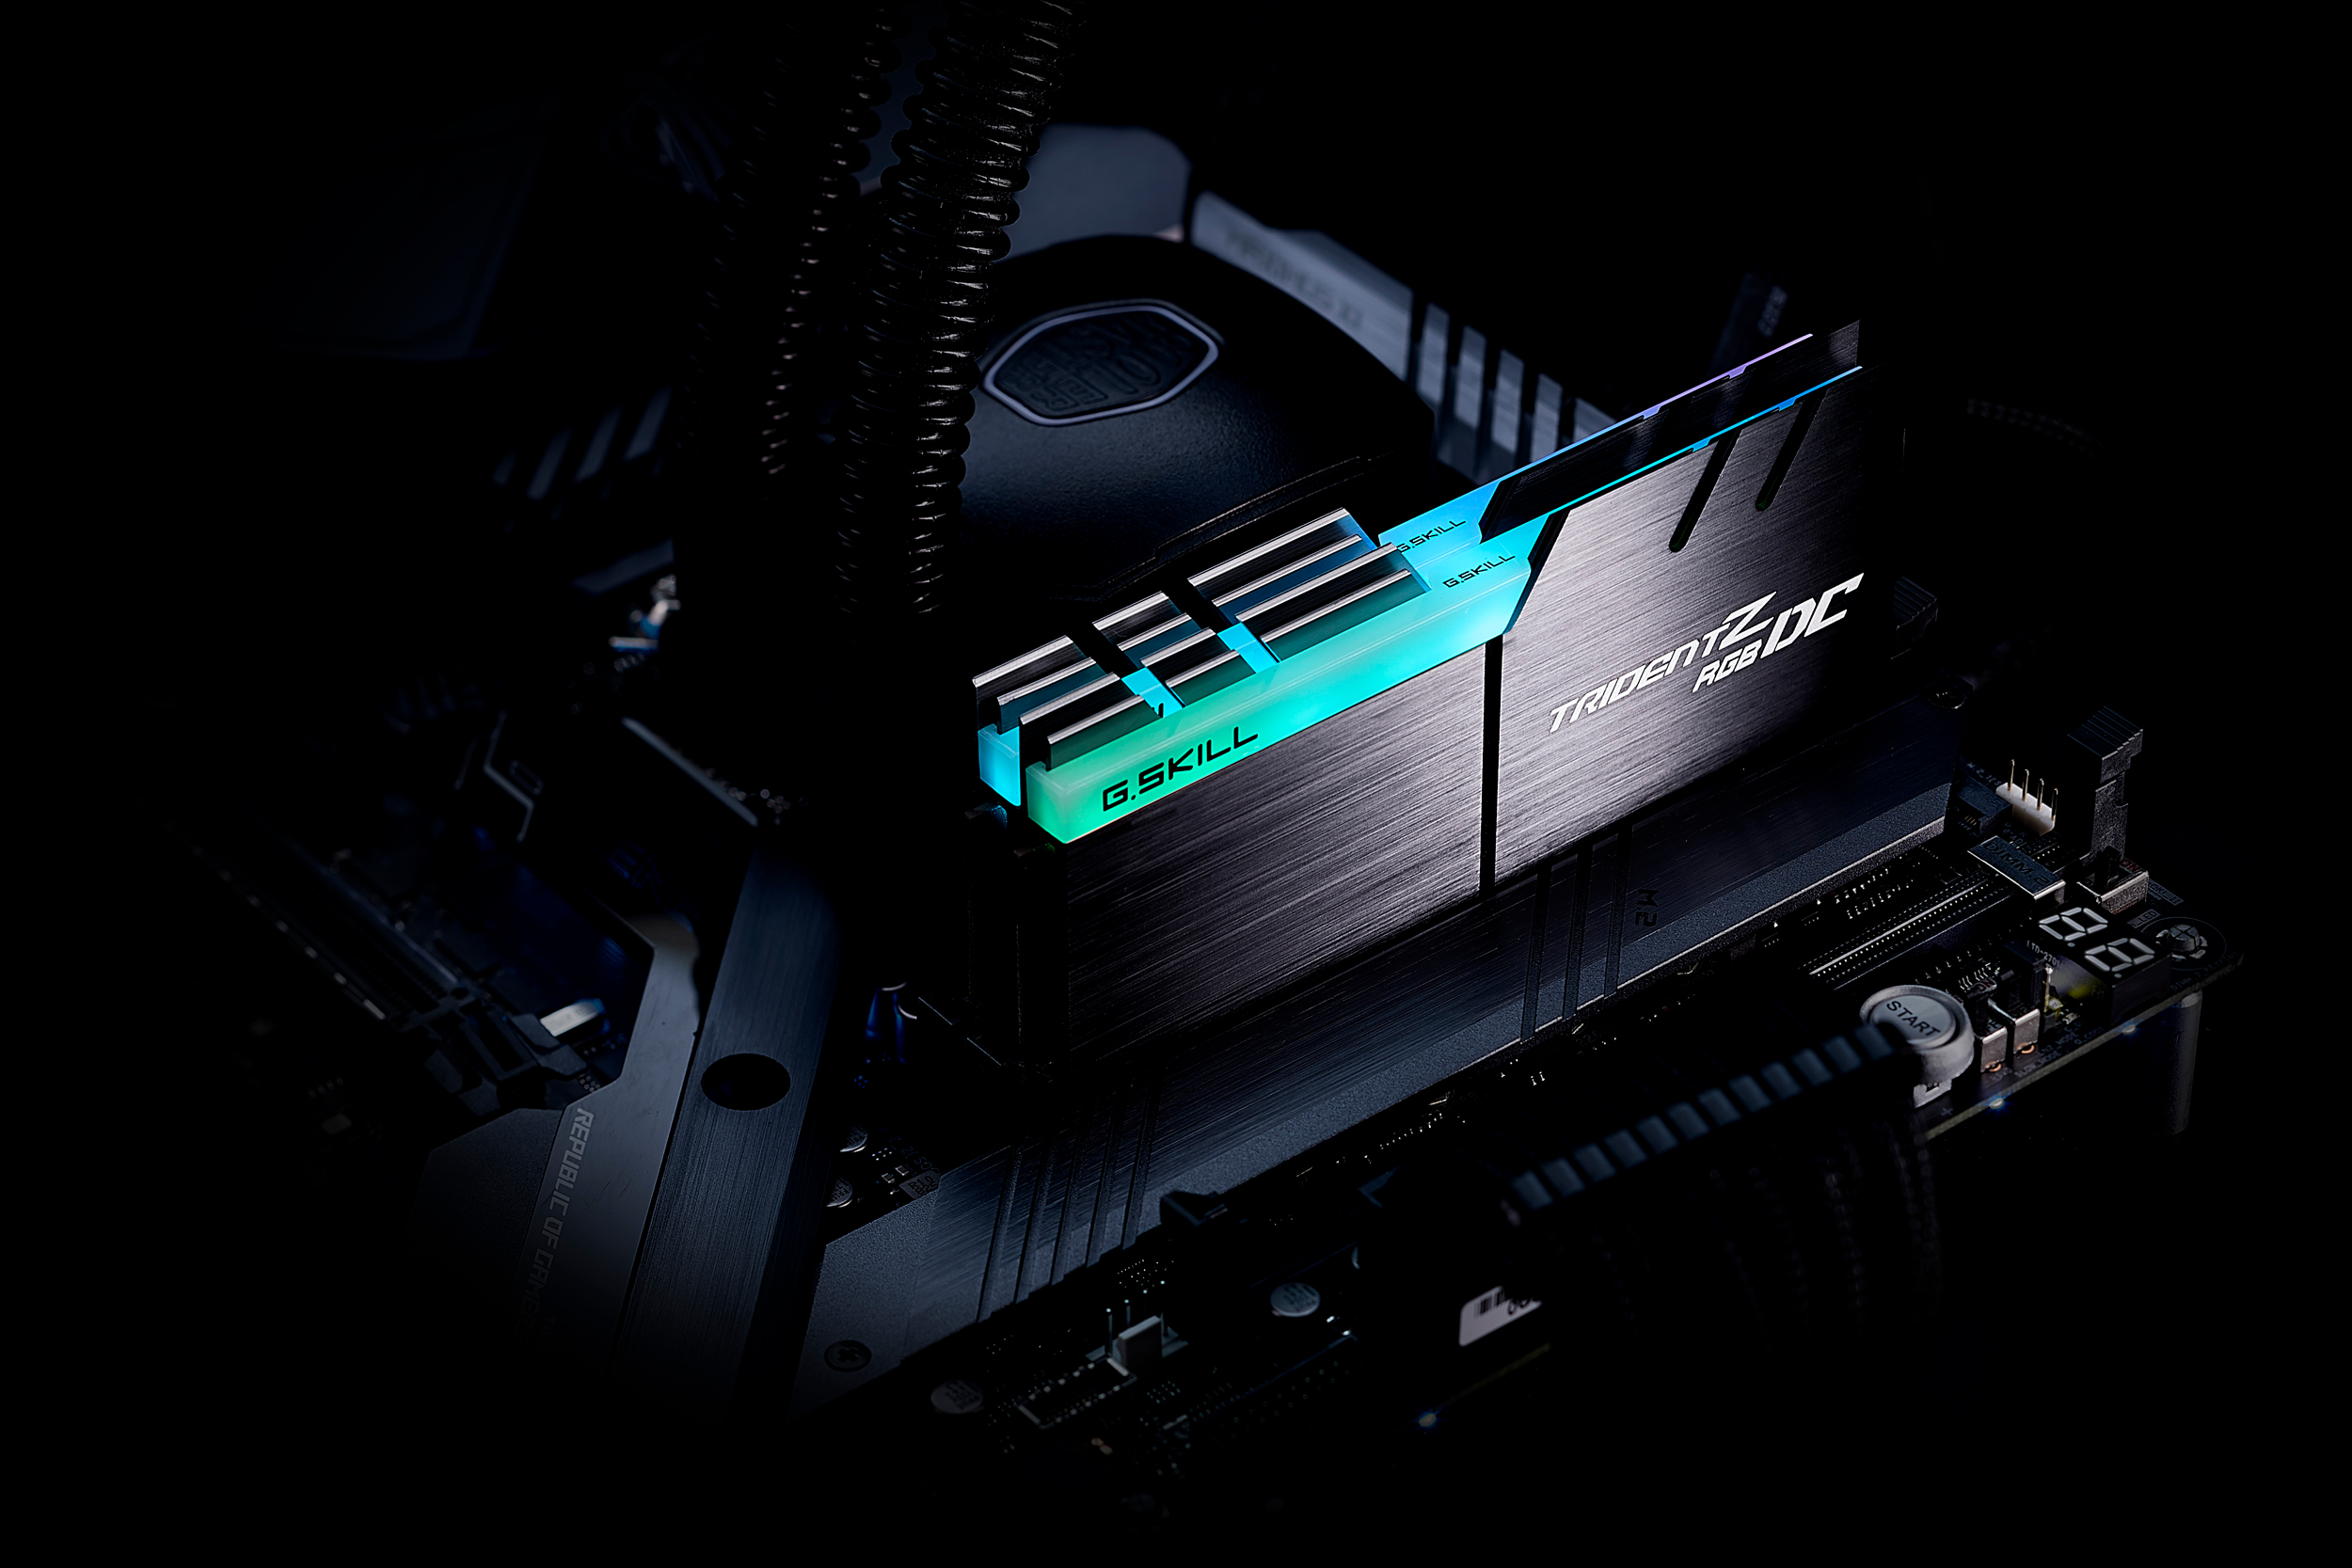 trident z rgb dc 04 G.SKILL เปิดตัวแรม Trident Z RGB DC Series DDR4 64GB (32GBx2) รุ่นใหม่ล่าสุดรองรับเมนบอร์ด Z390 เต็มรูปแบบด้วยเทคโนโลยี Double Capacity DIMM Technology ที่ใช้แรมแค่ 1คู่แต่ความจุมากถึง 64GB